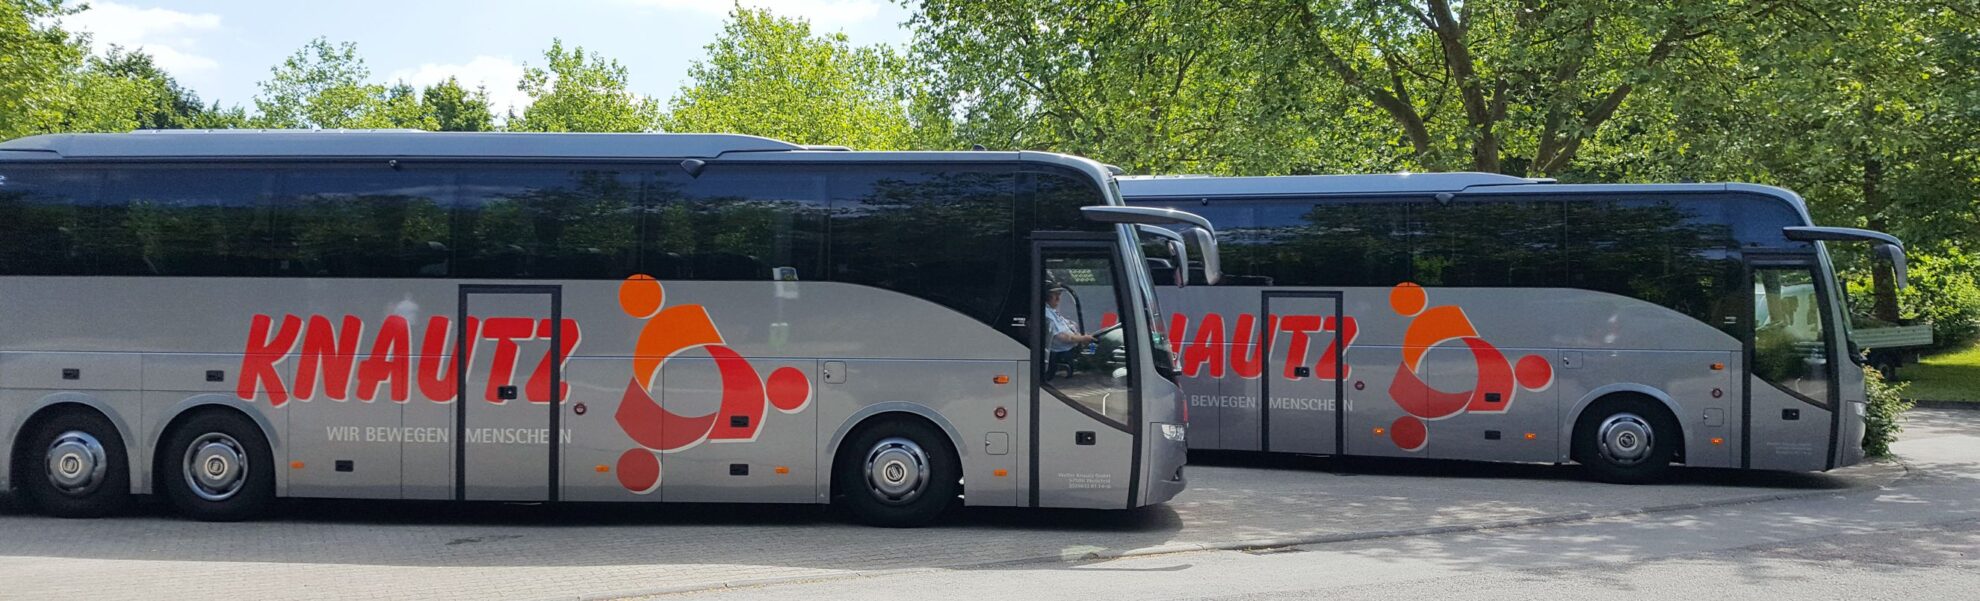 Knautz_Reisebusse